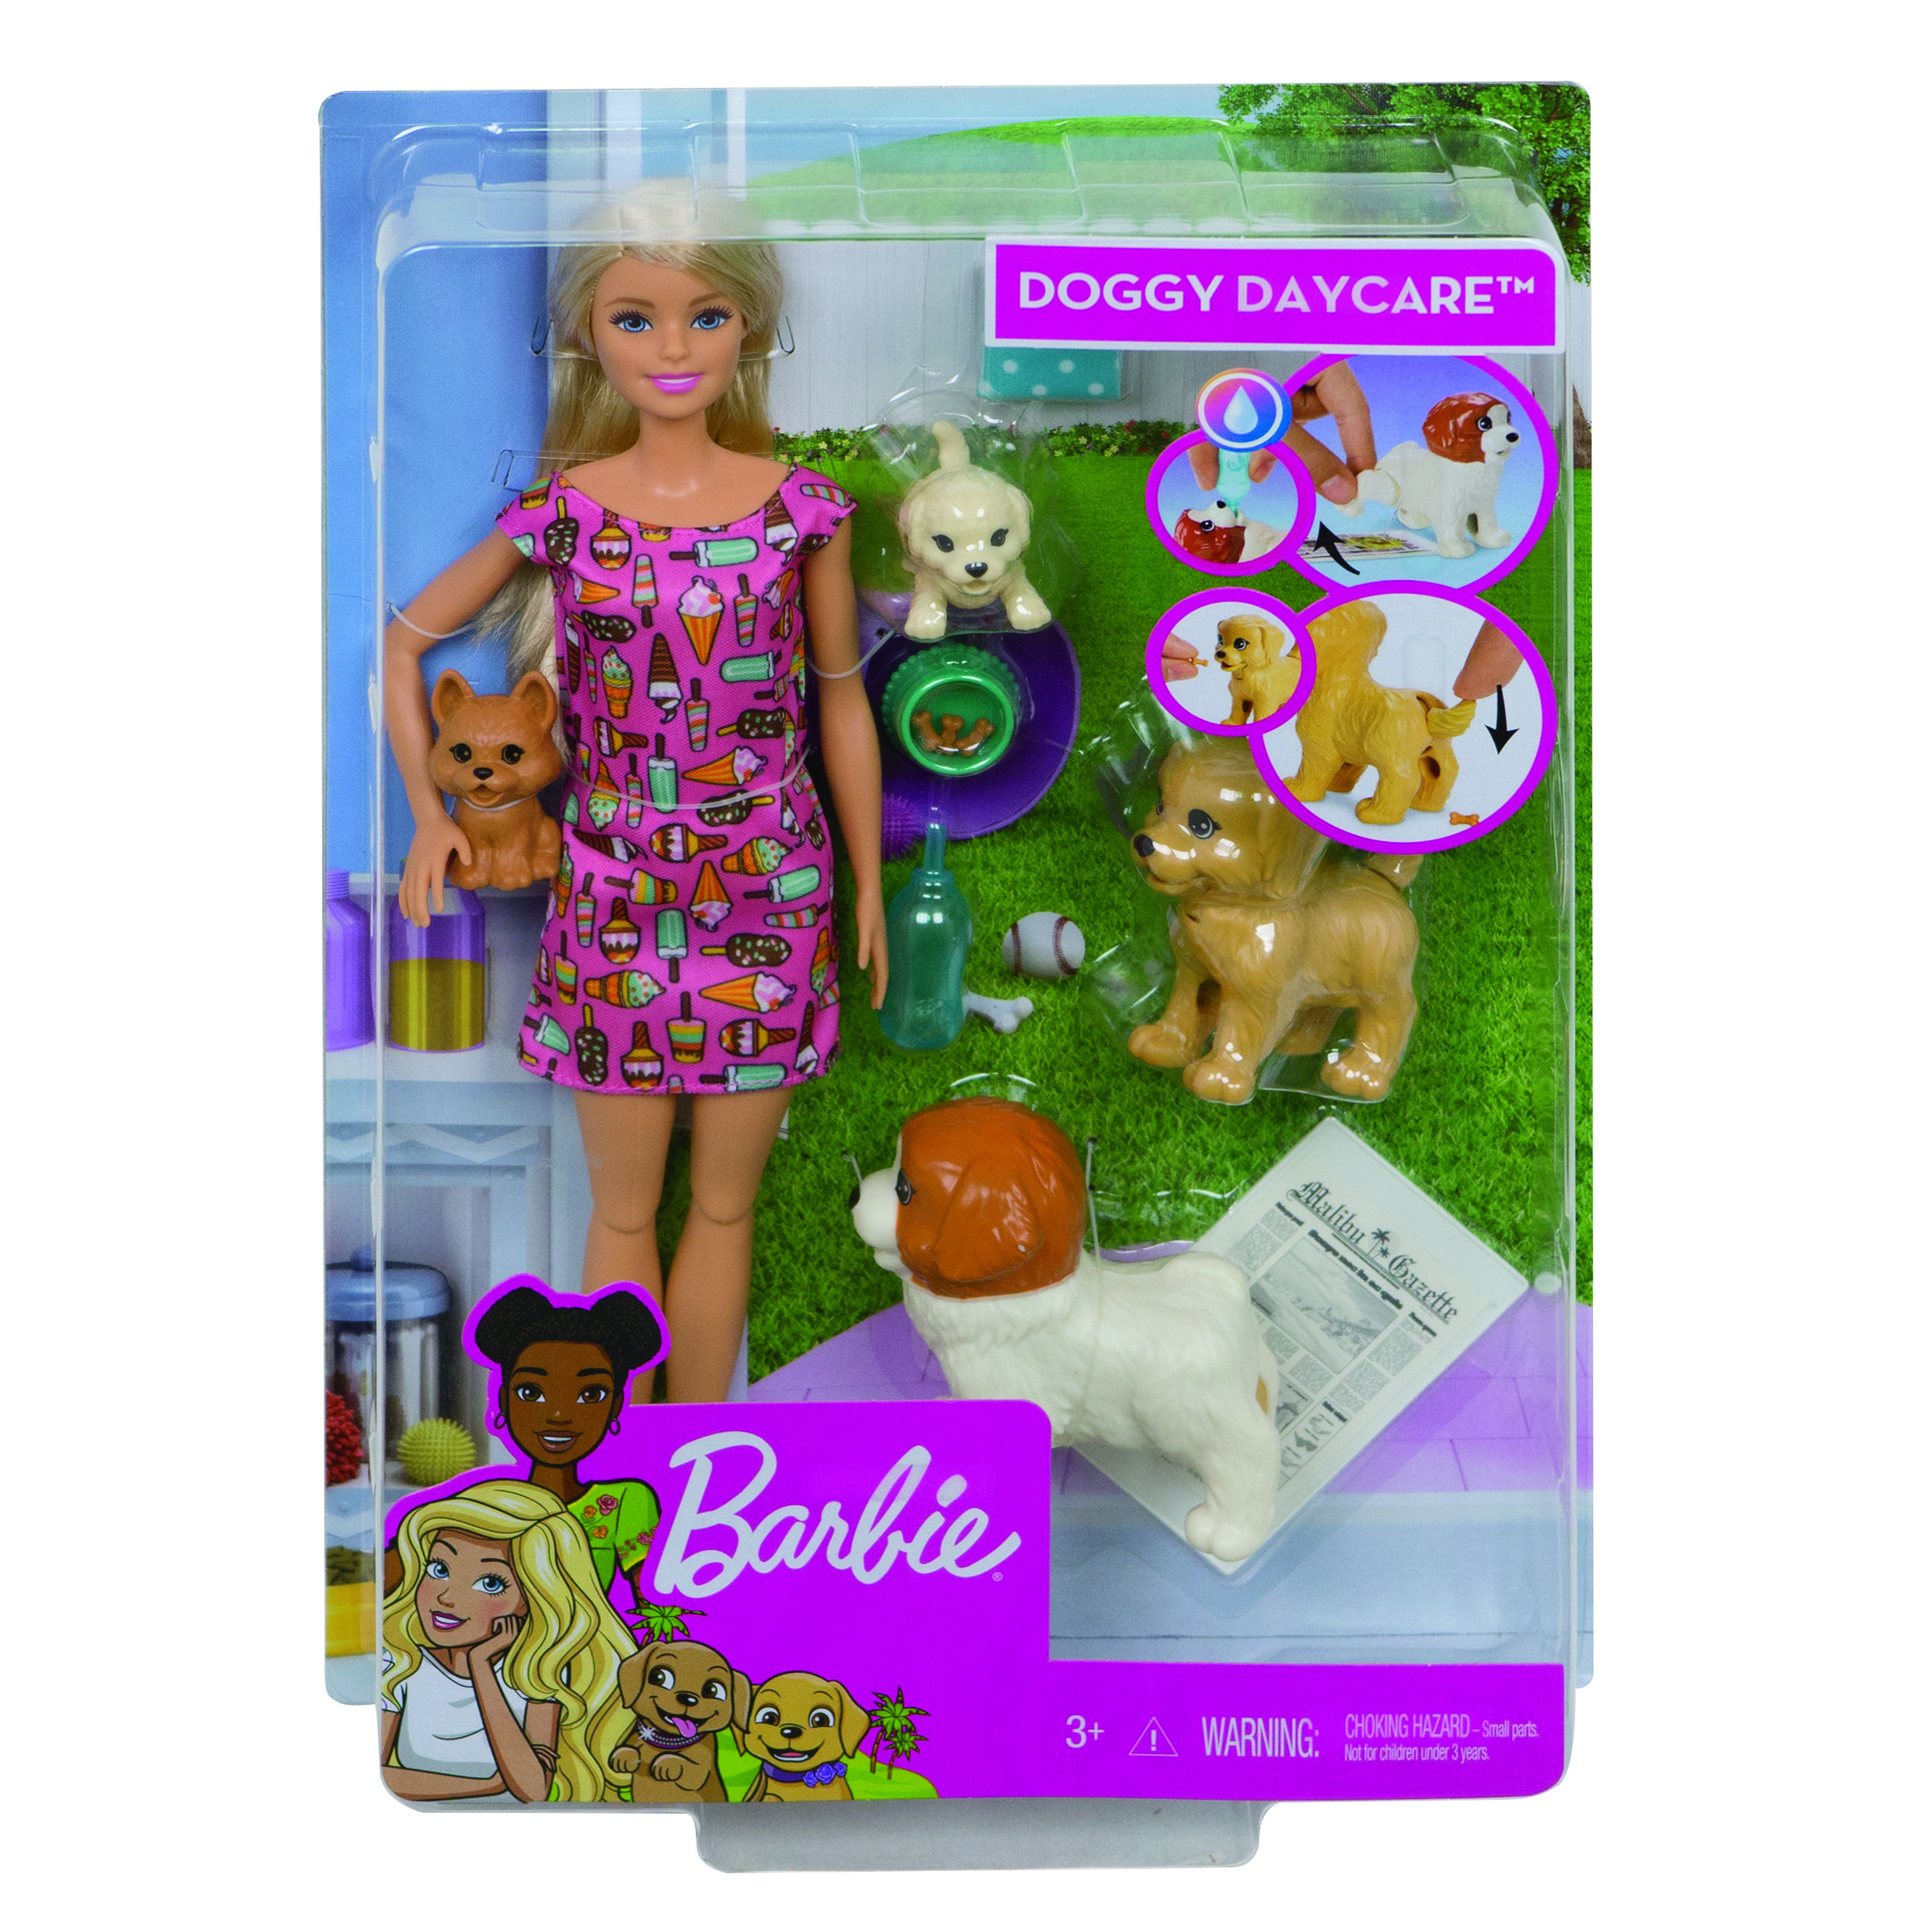 barbie pearl princess cast